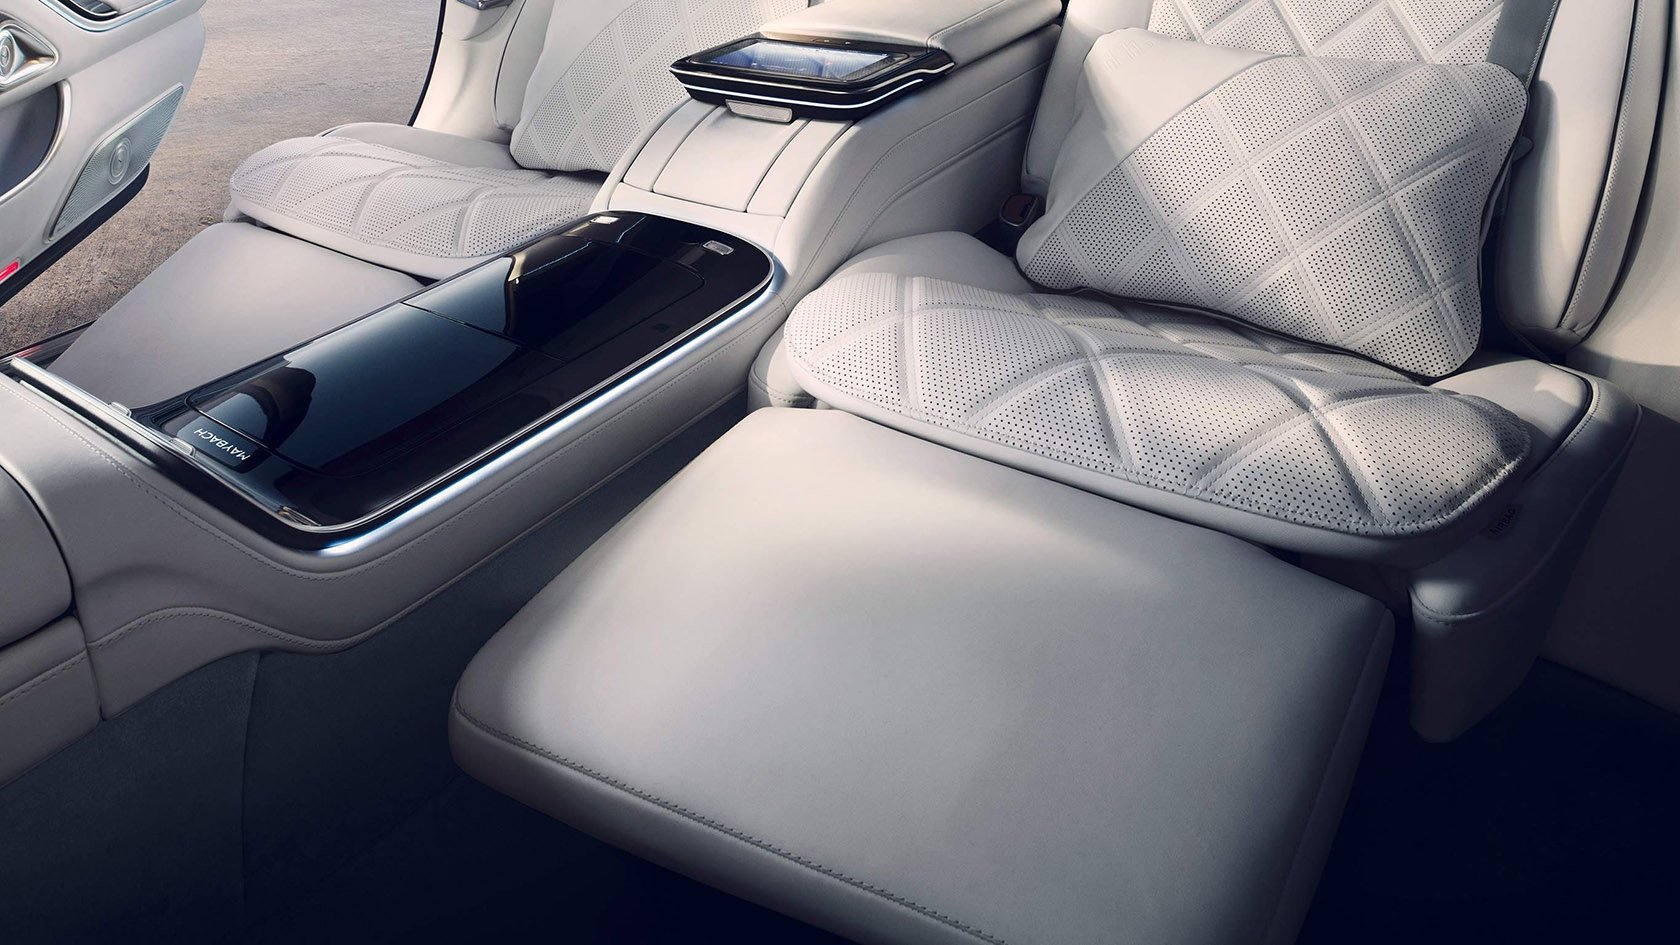 Комфорт Mercedes Maybach S-class Седан Главные особенности комфорта салона #2